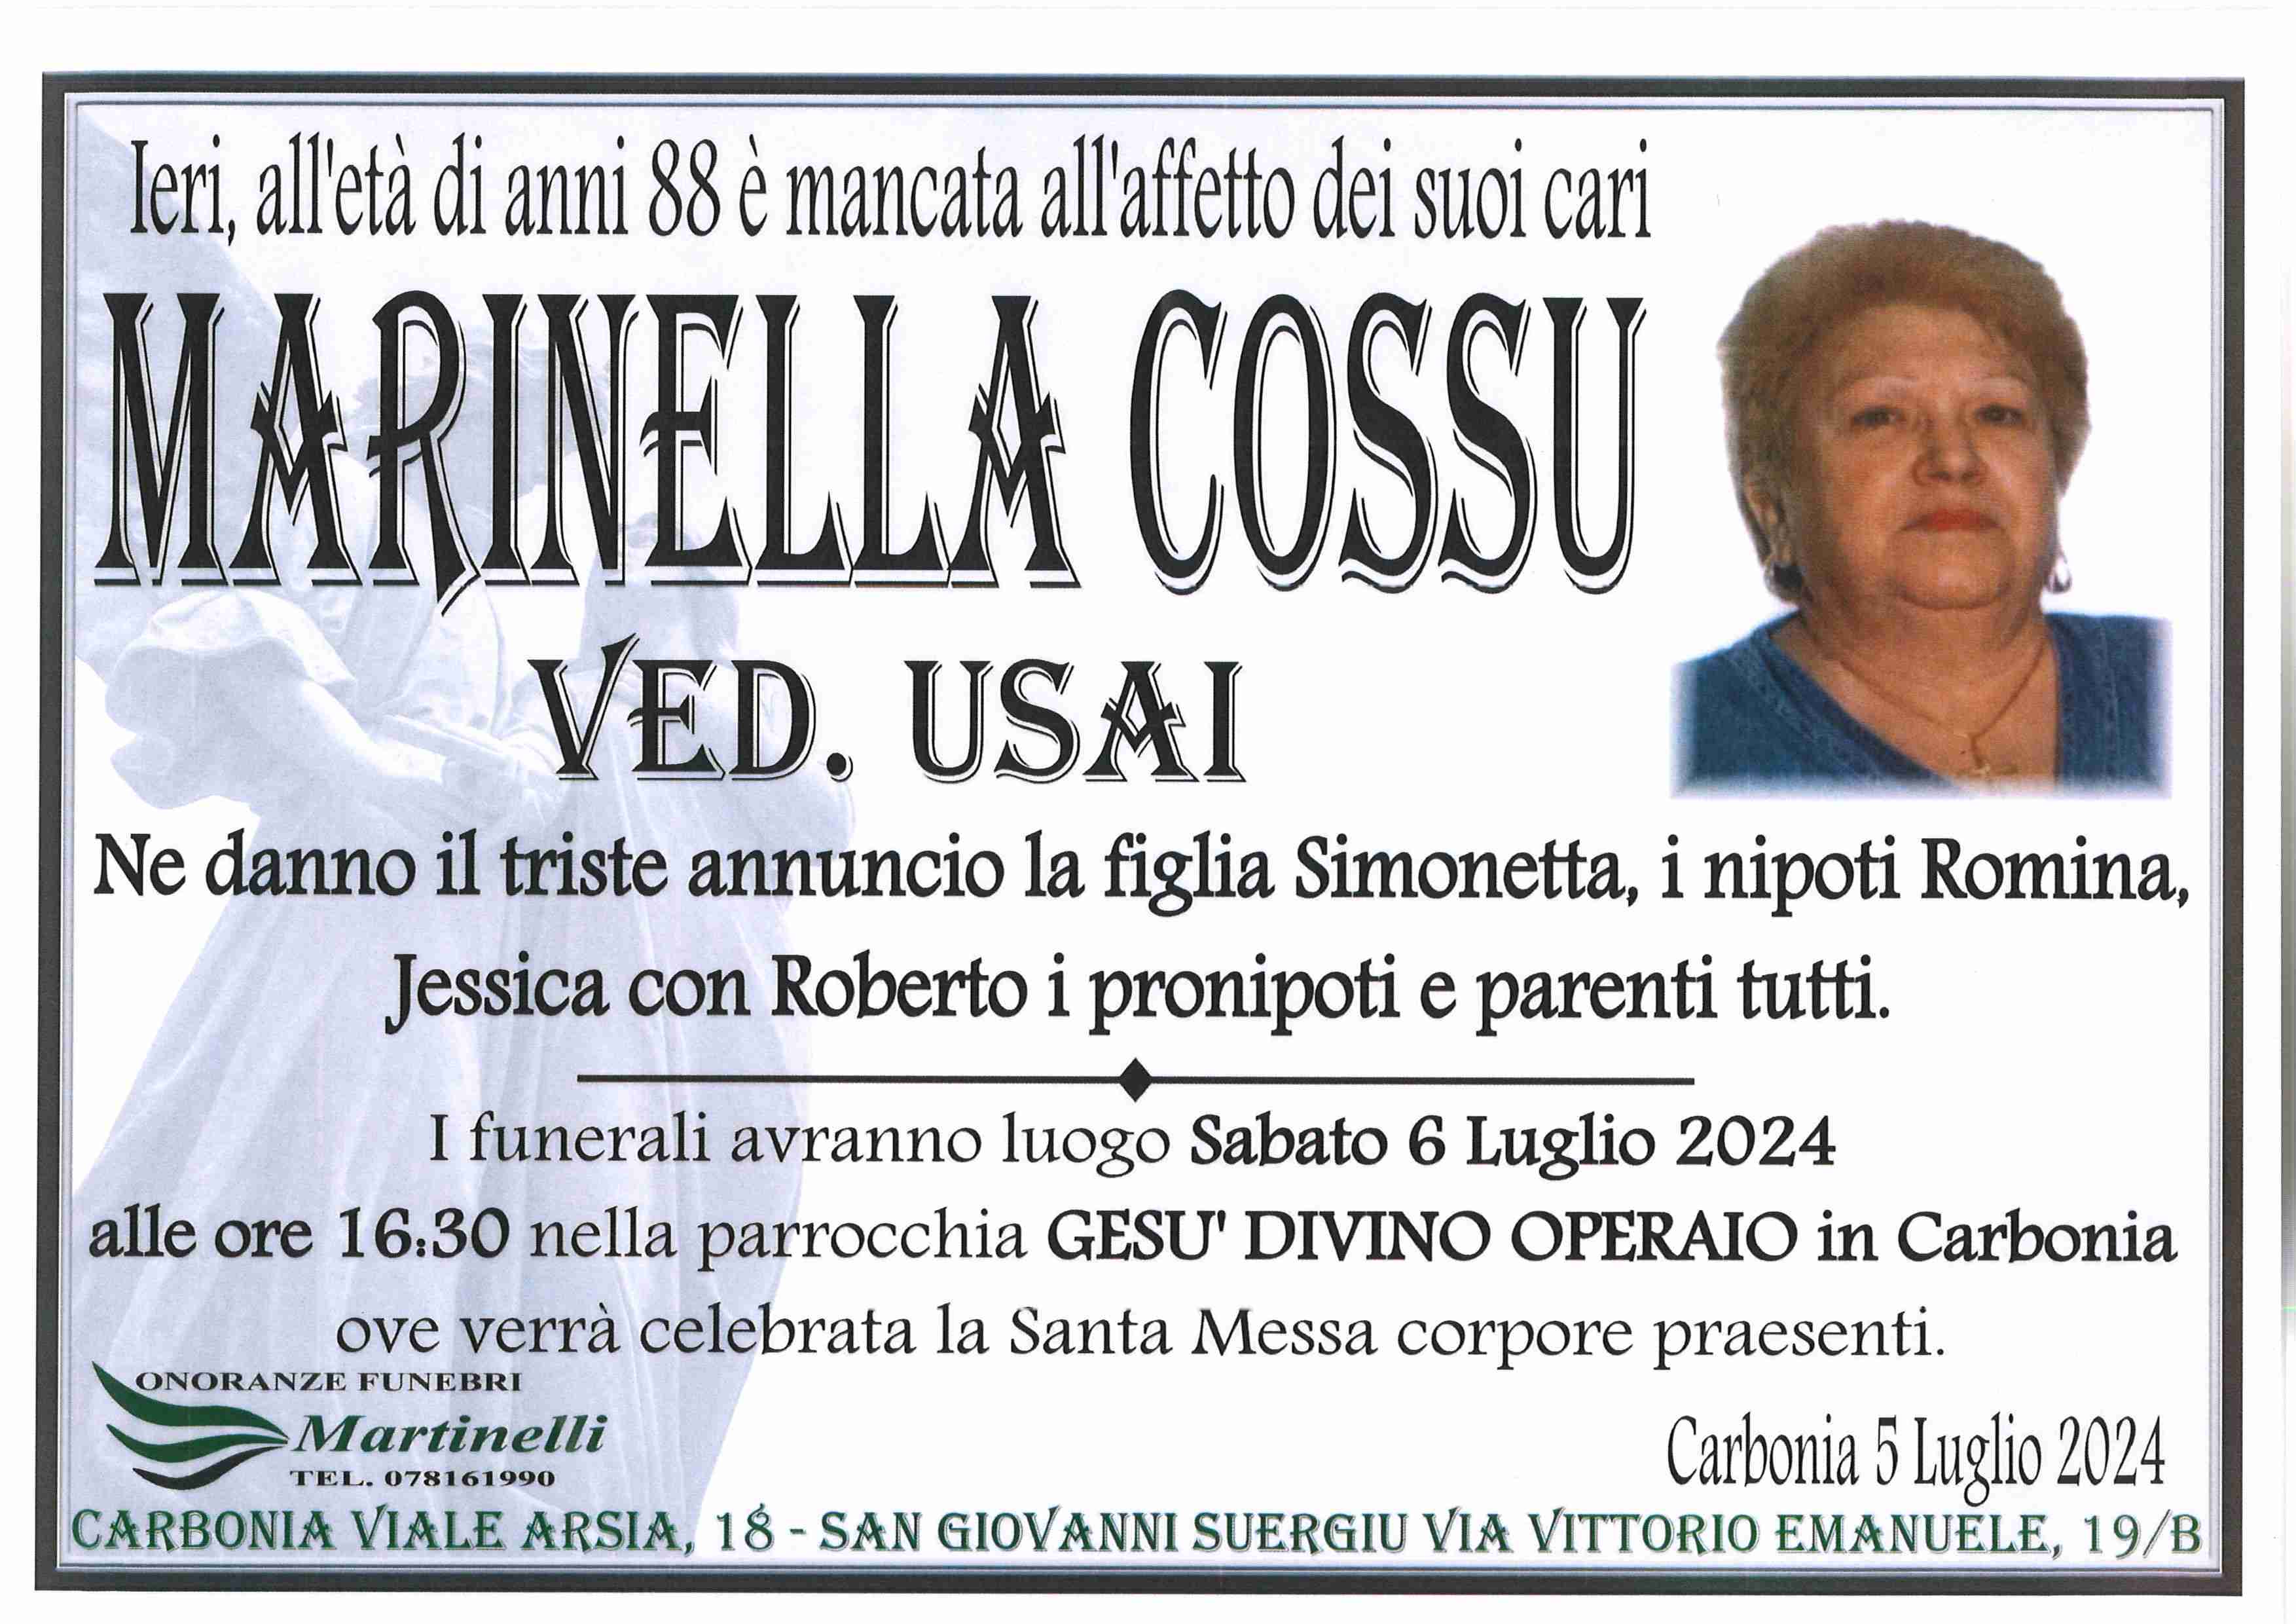 Marinella Cossu